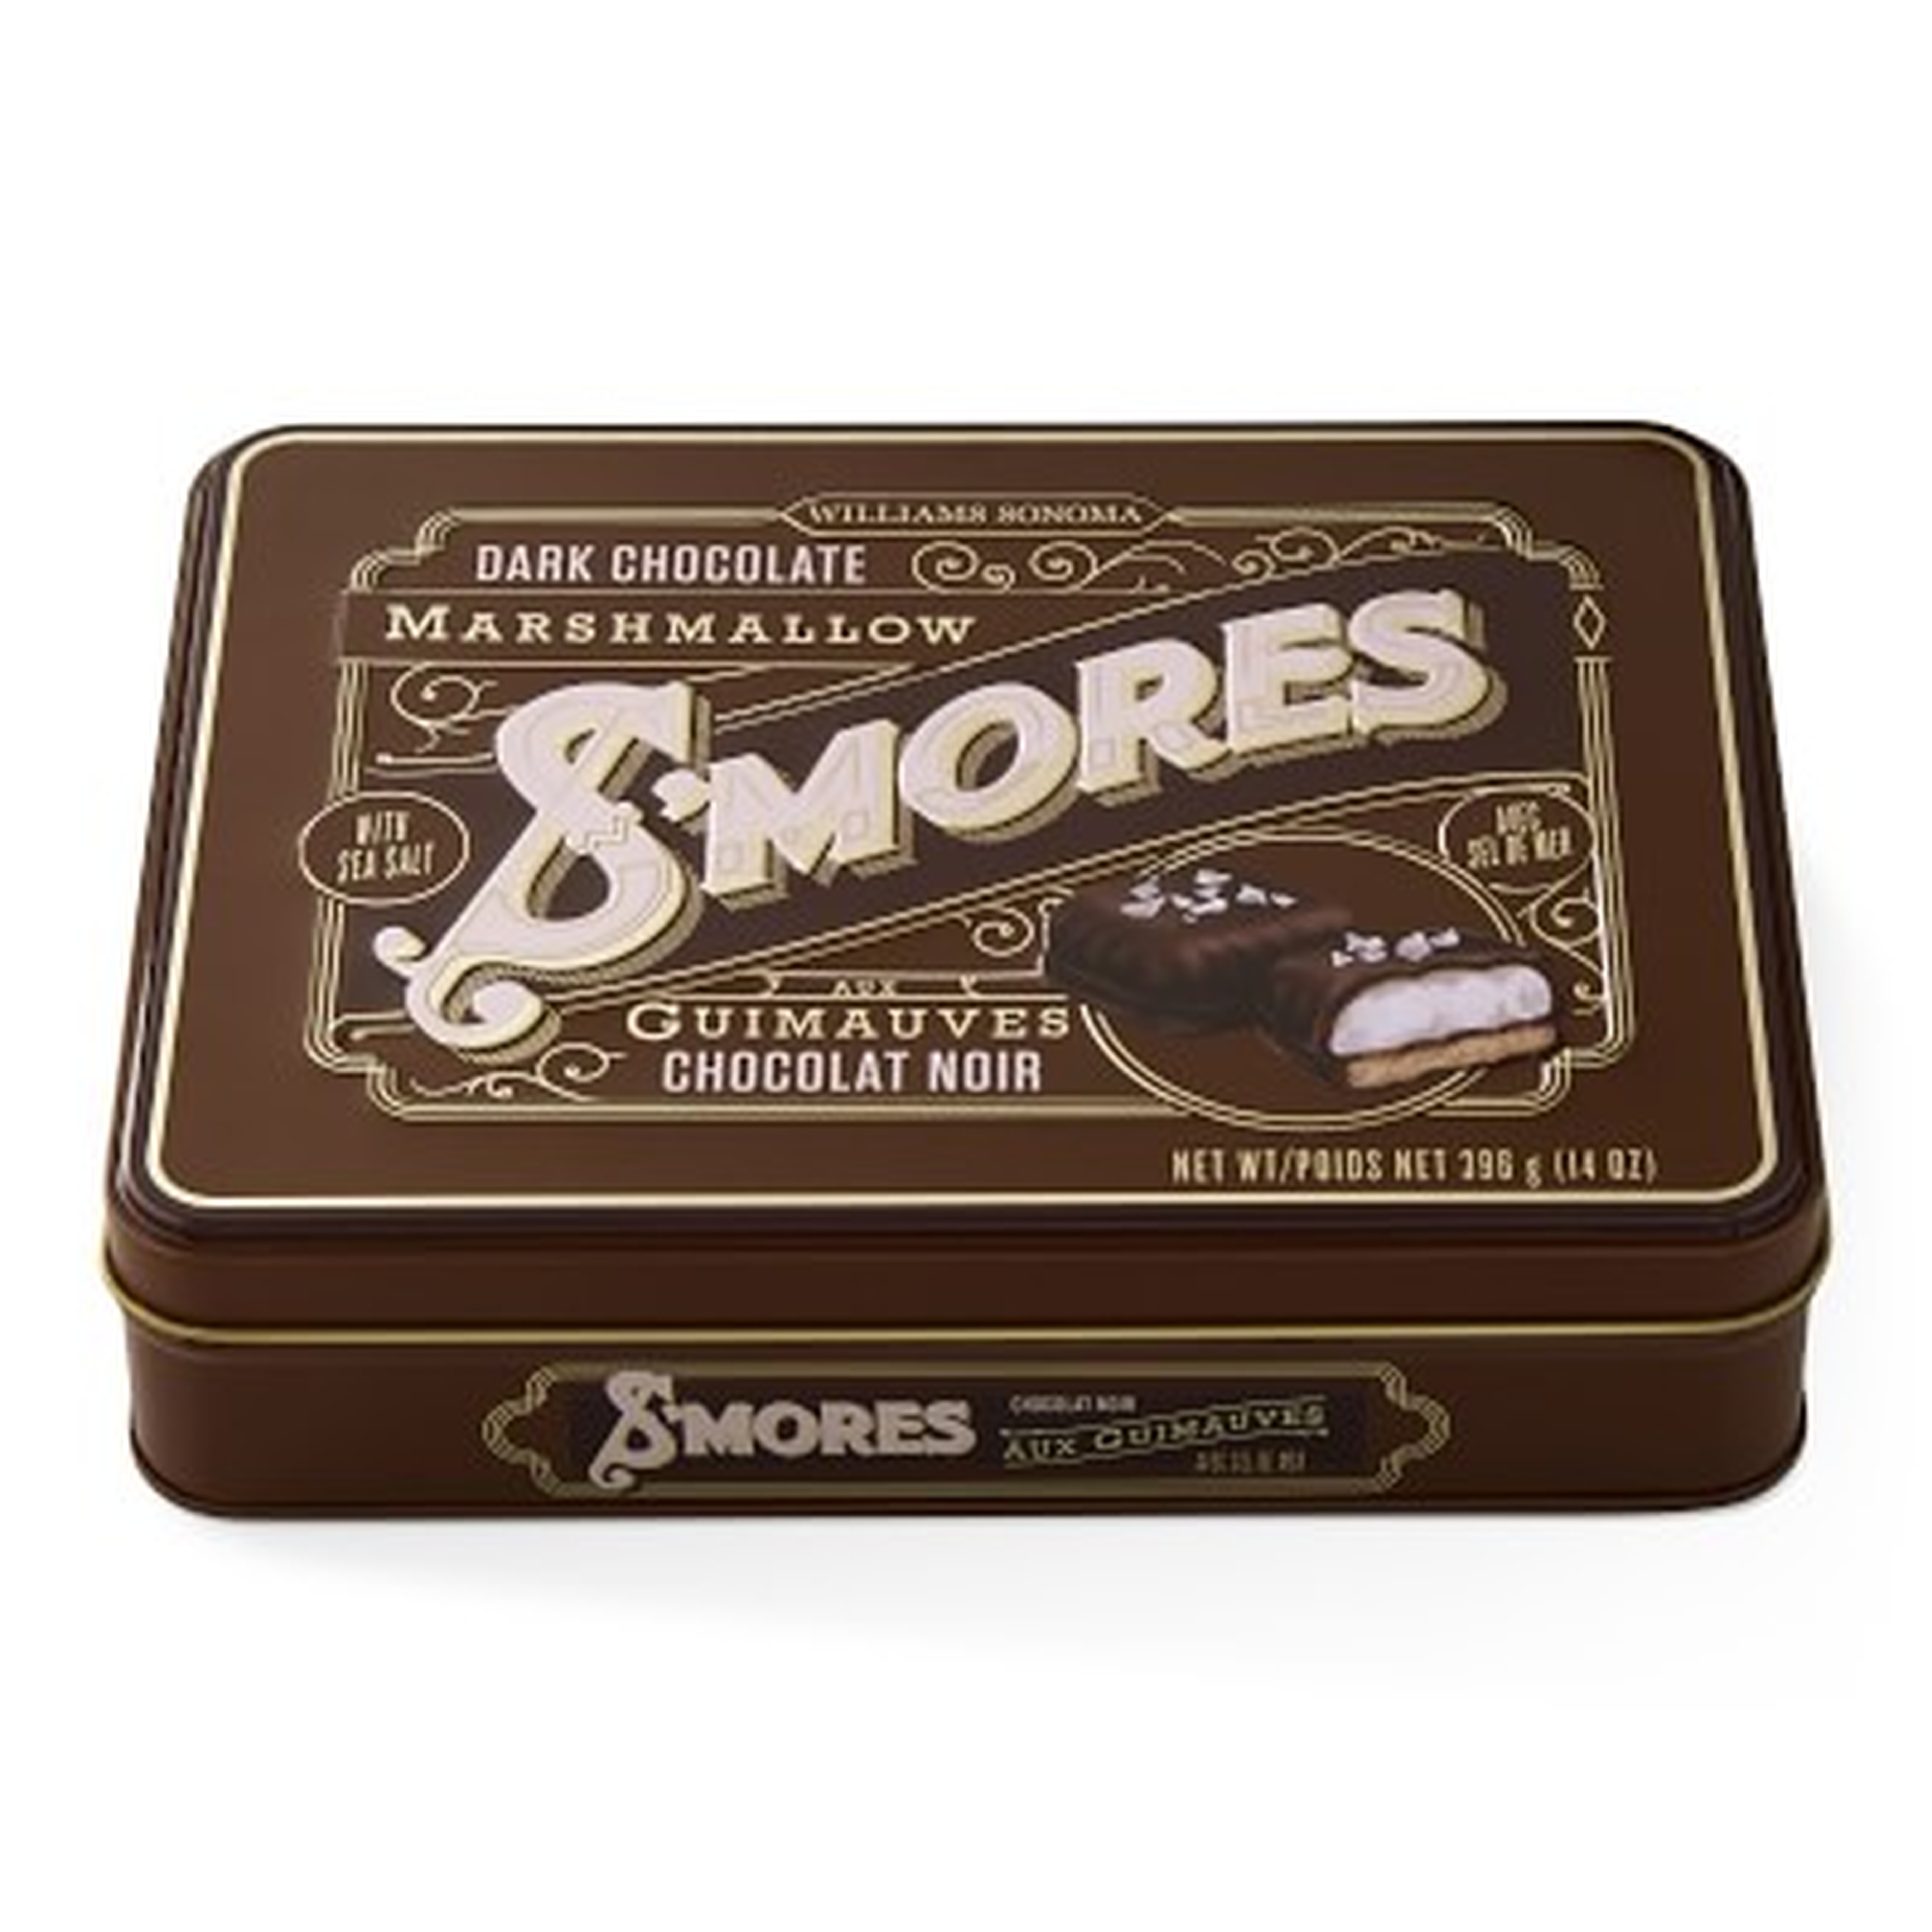 Dark Chocolate Smores, Set of 2 - Williams Sonoma